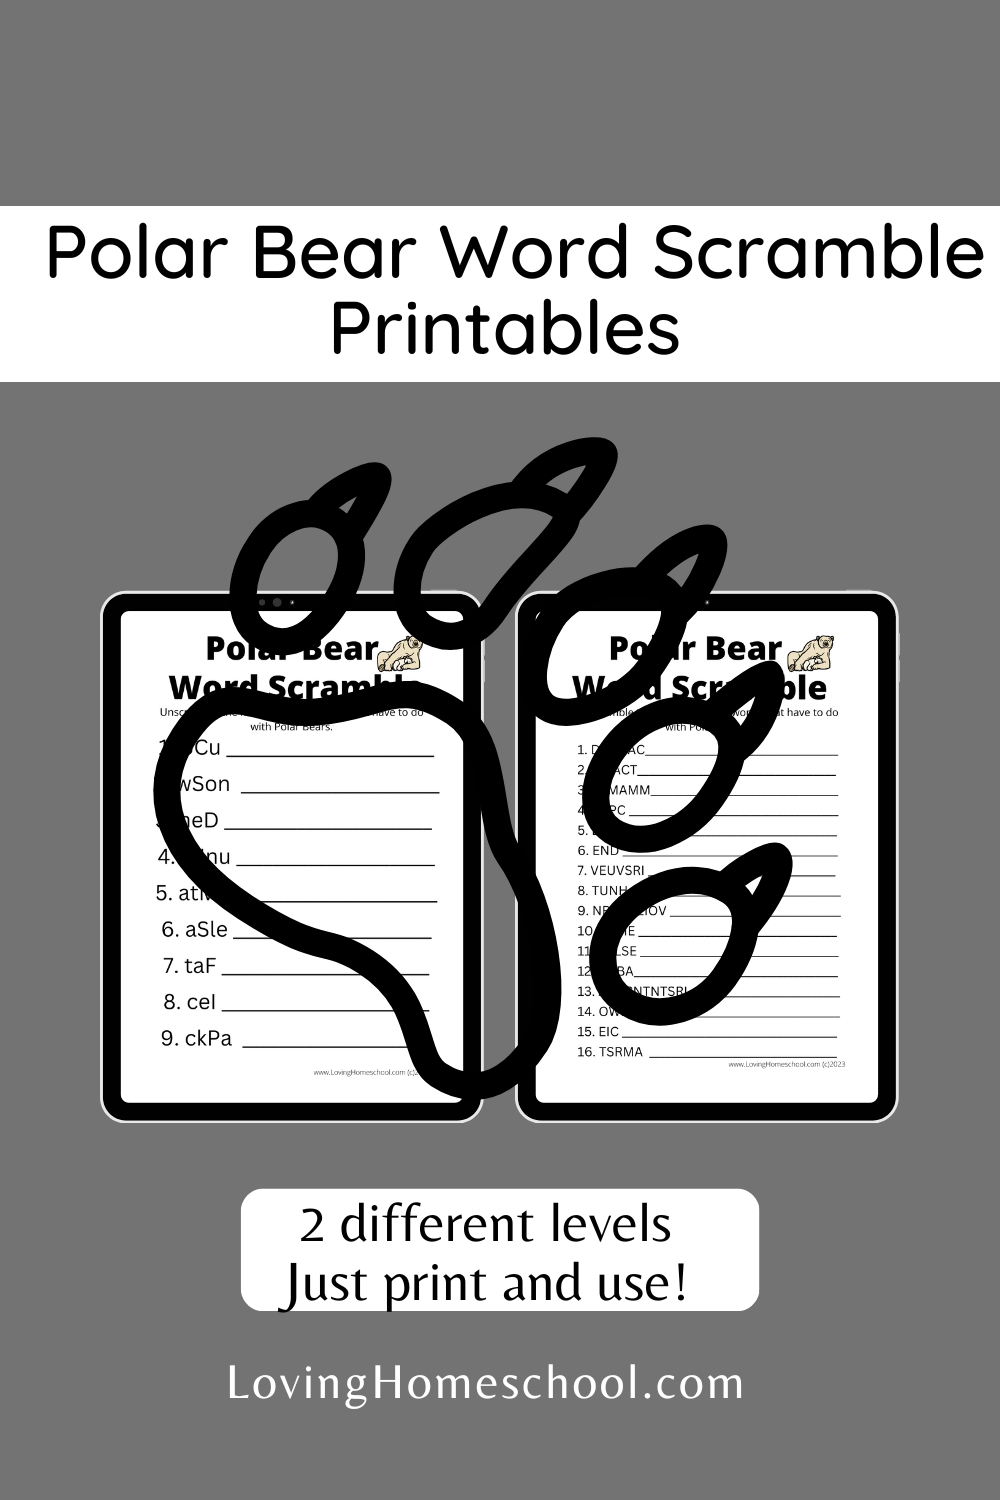 Polar Bear Word Scramble Printables Pinterest Pin